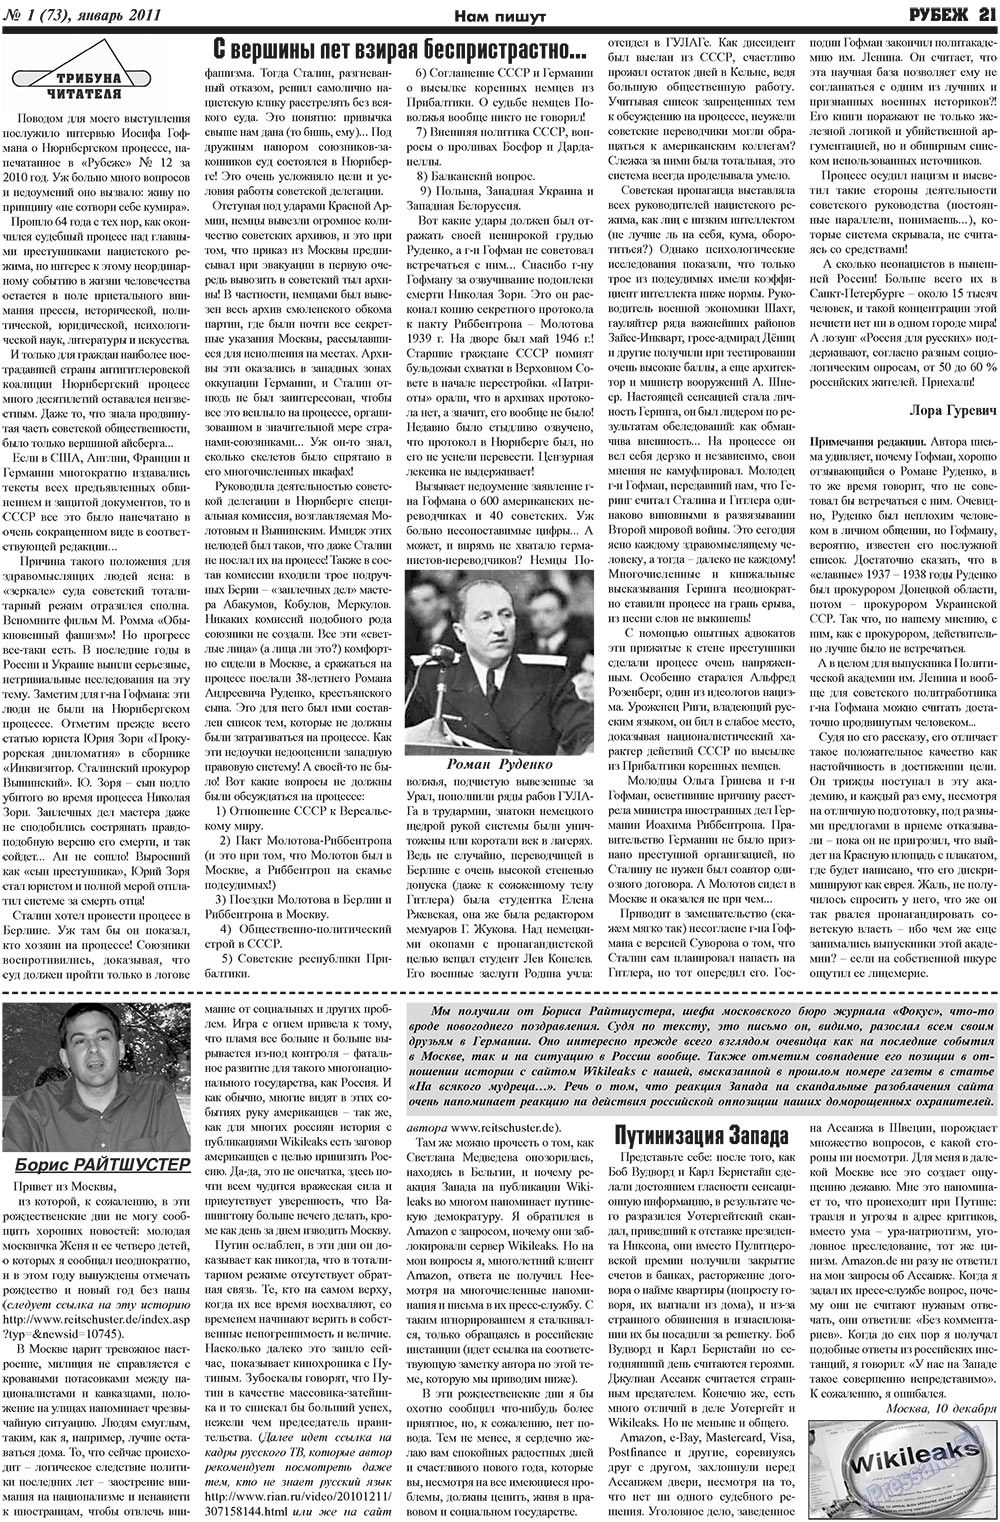 Рубеж, газета. 2011 №1 стр.21